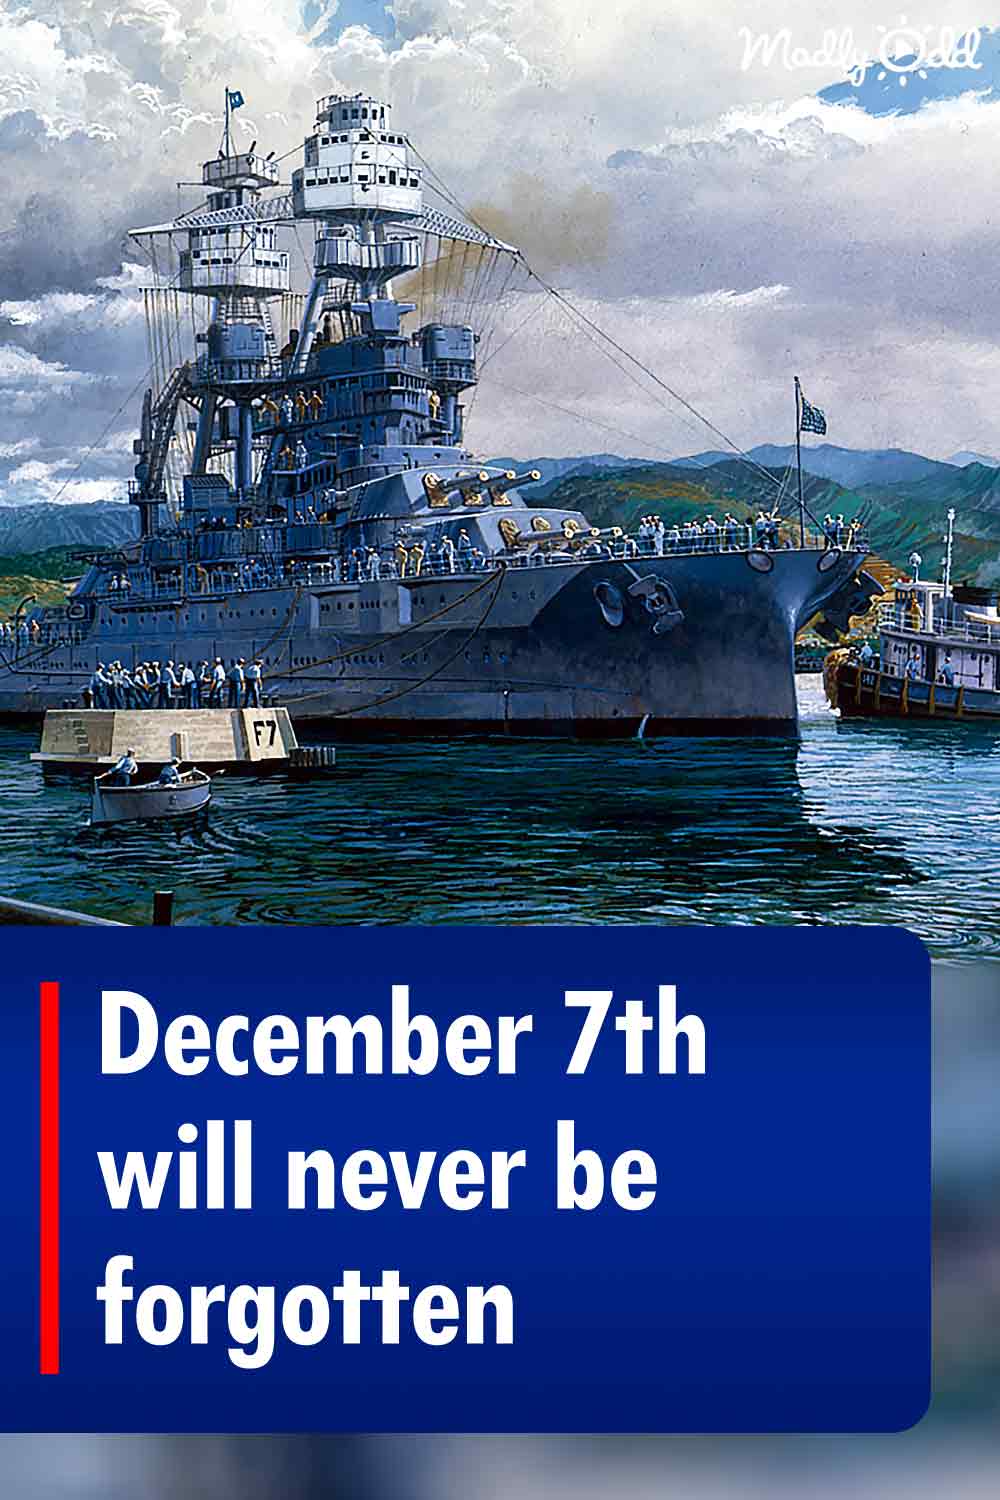 December 7th will never be forgotten